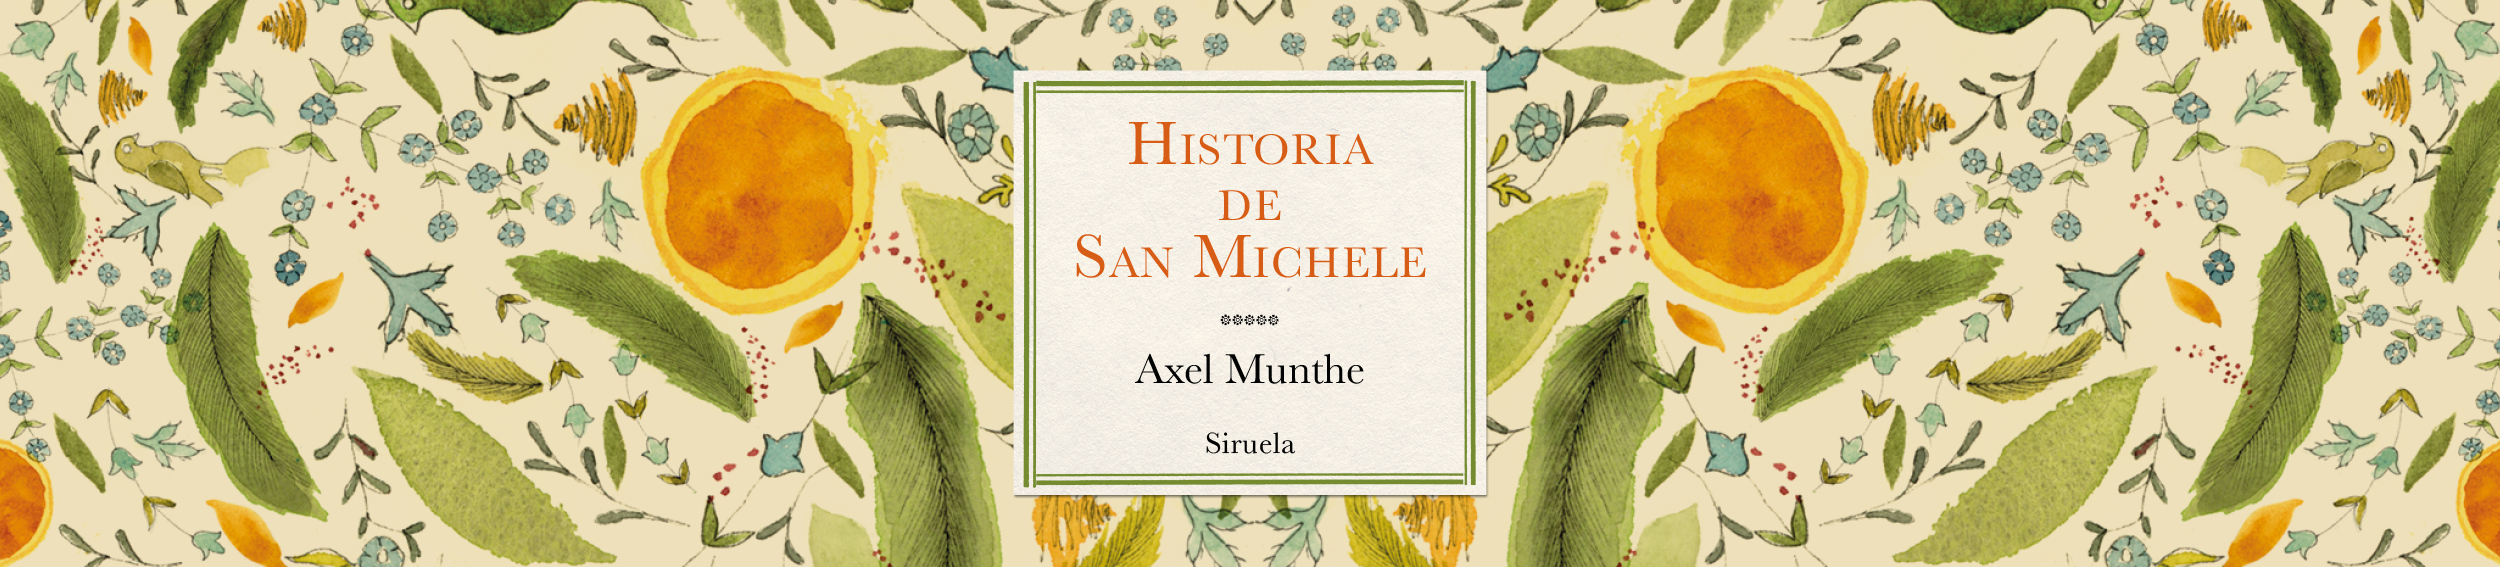 Historia de San Michele